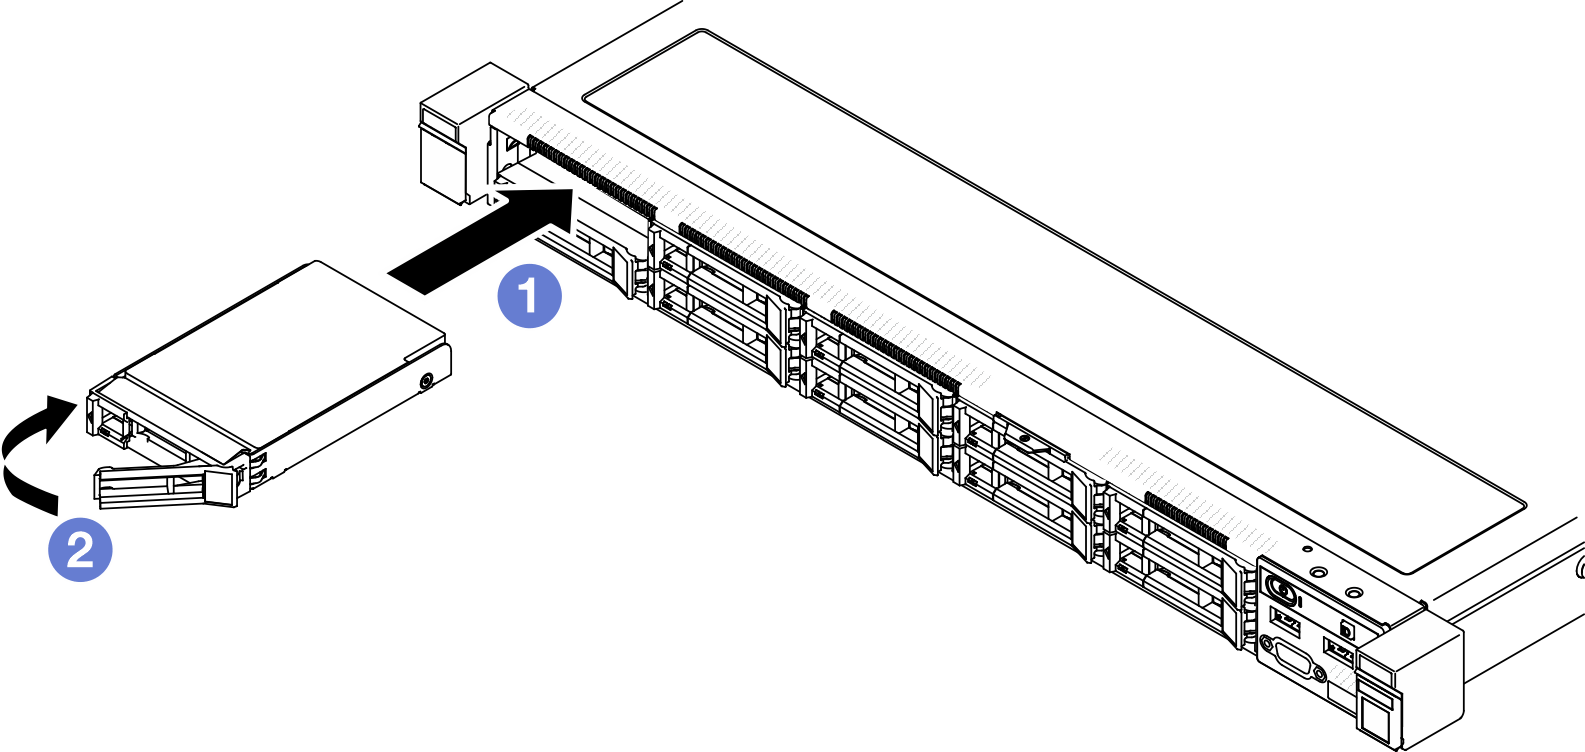 2.5-inch hot-swap drive installation